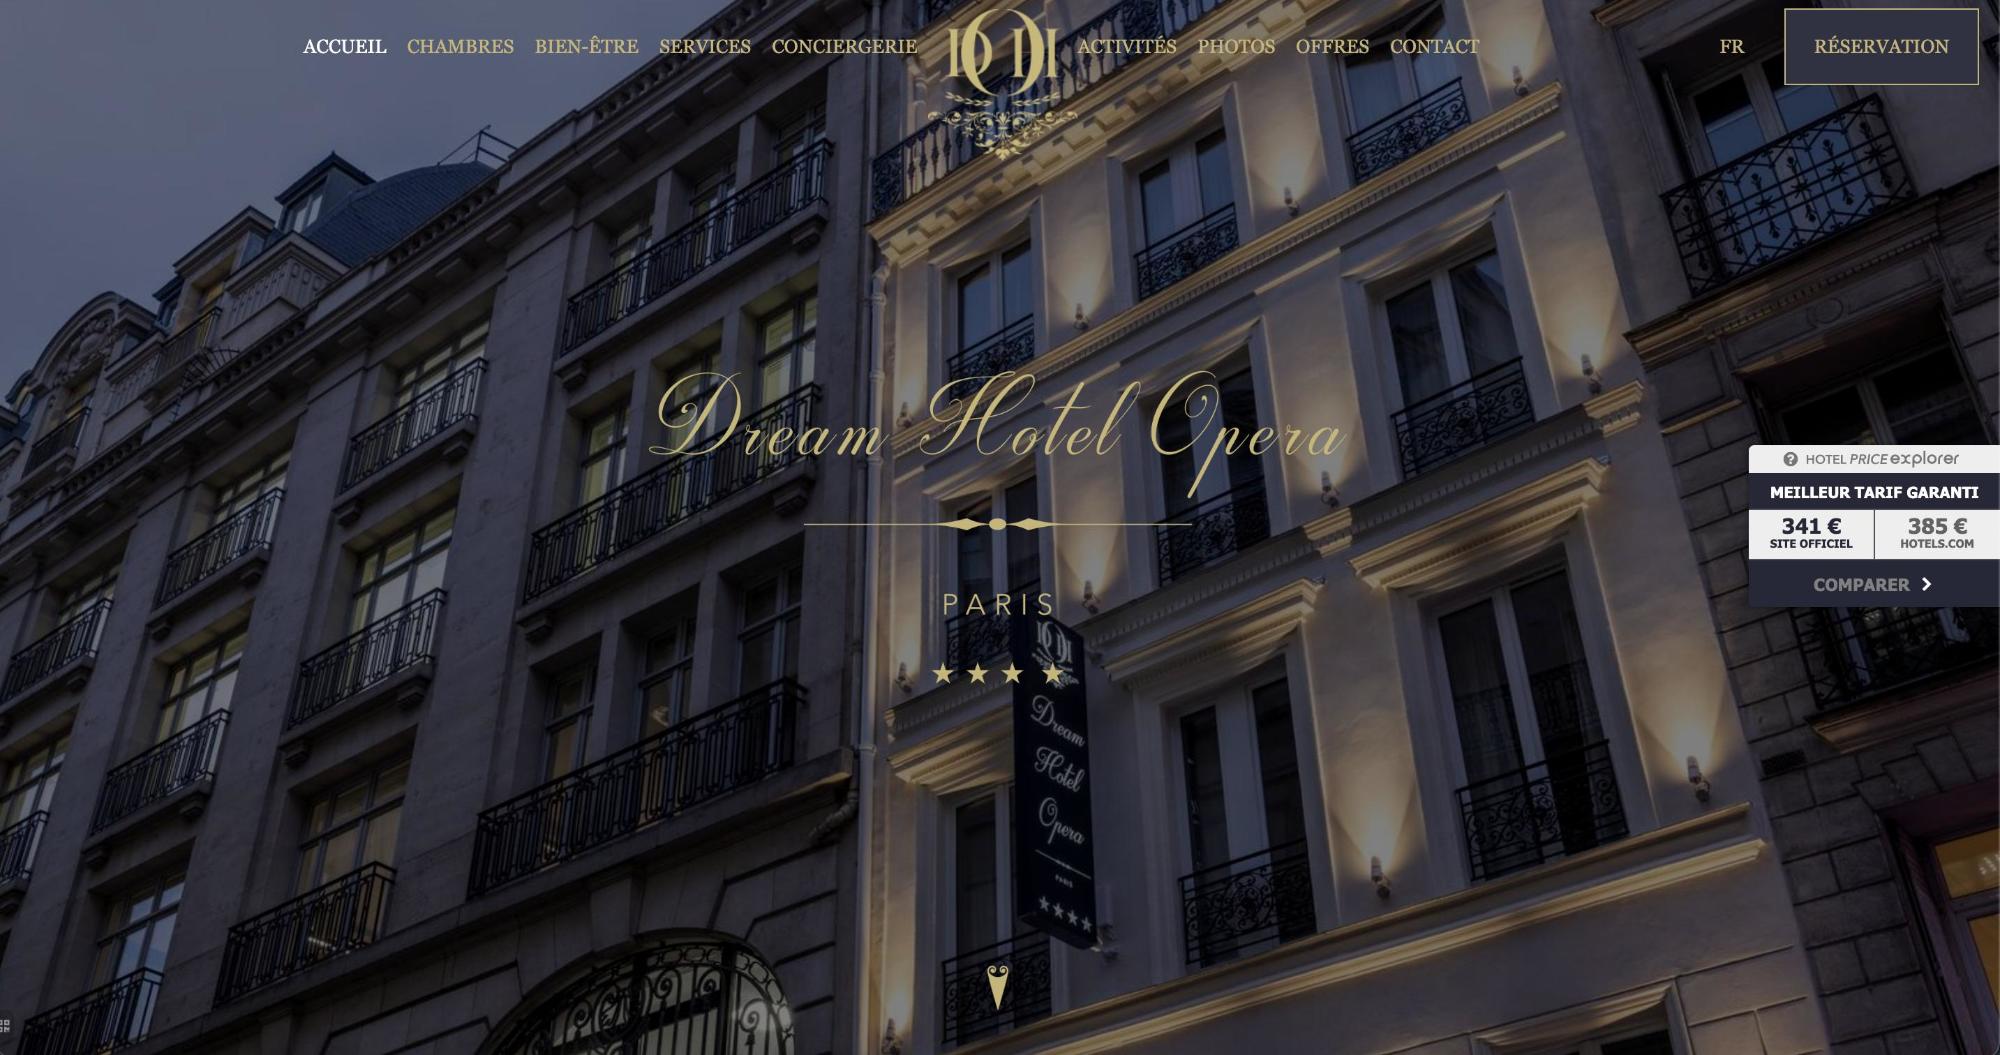 Agence MMCréation | Portfolio Dream Hotel Opera